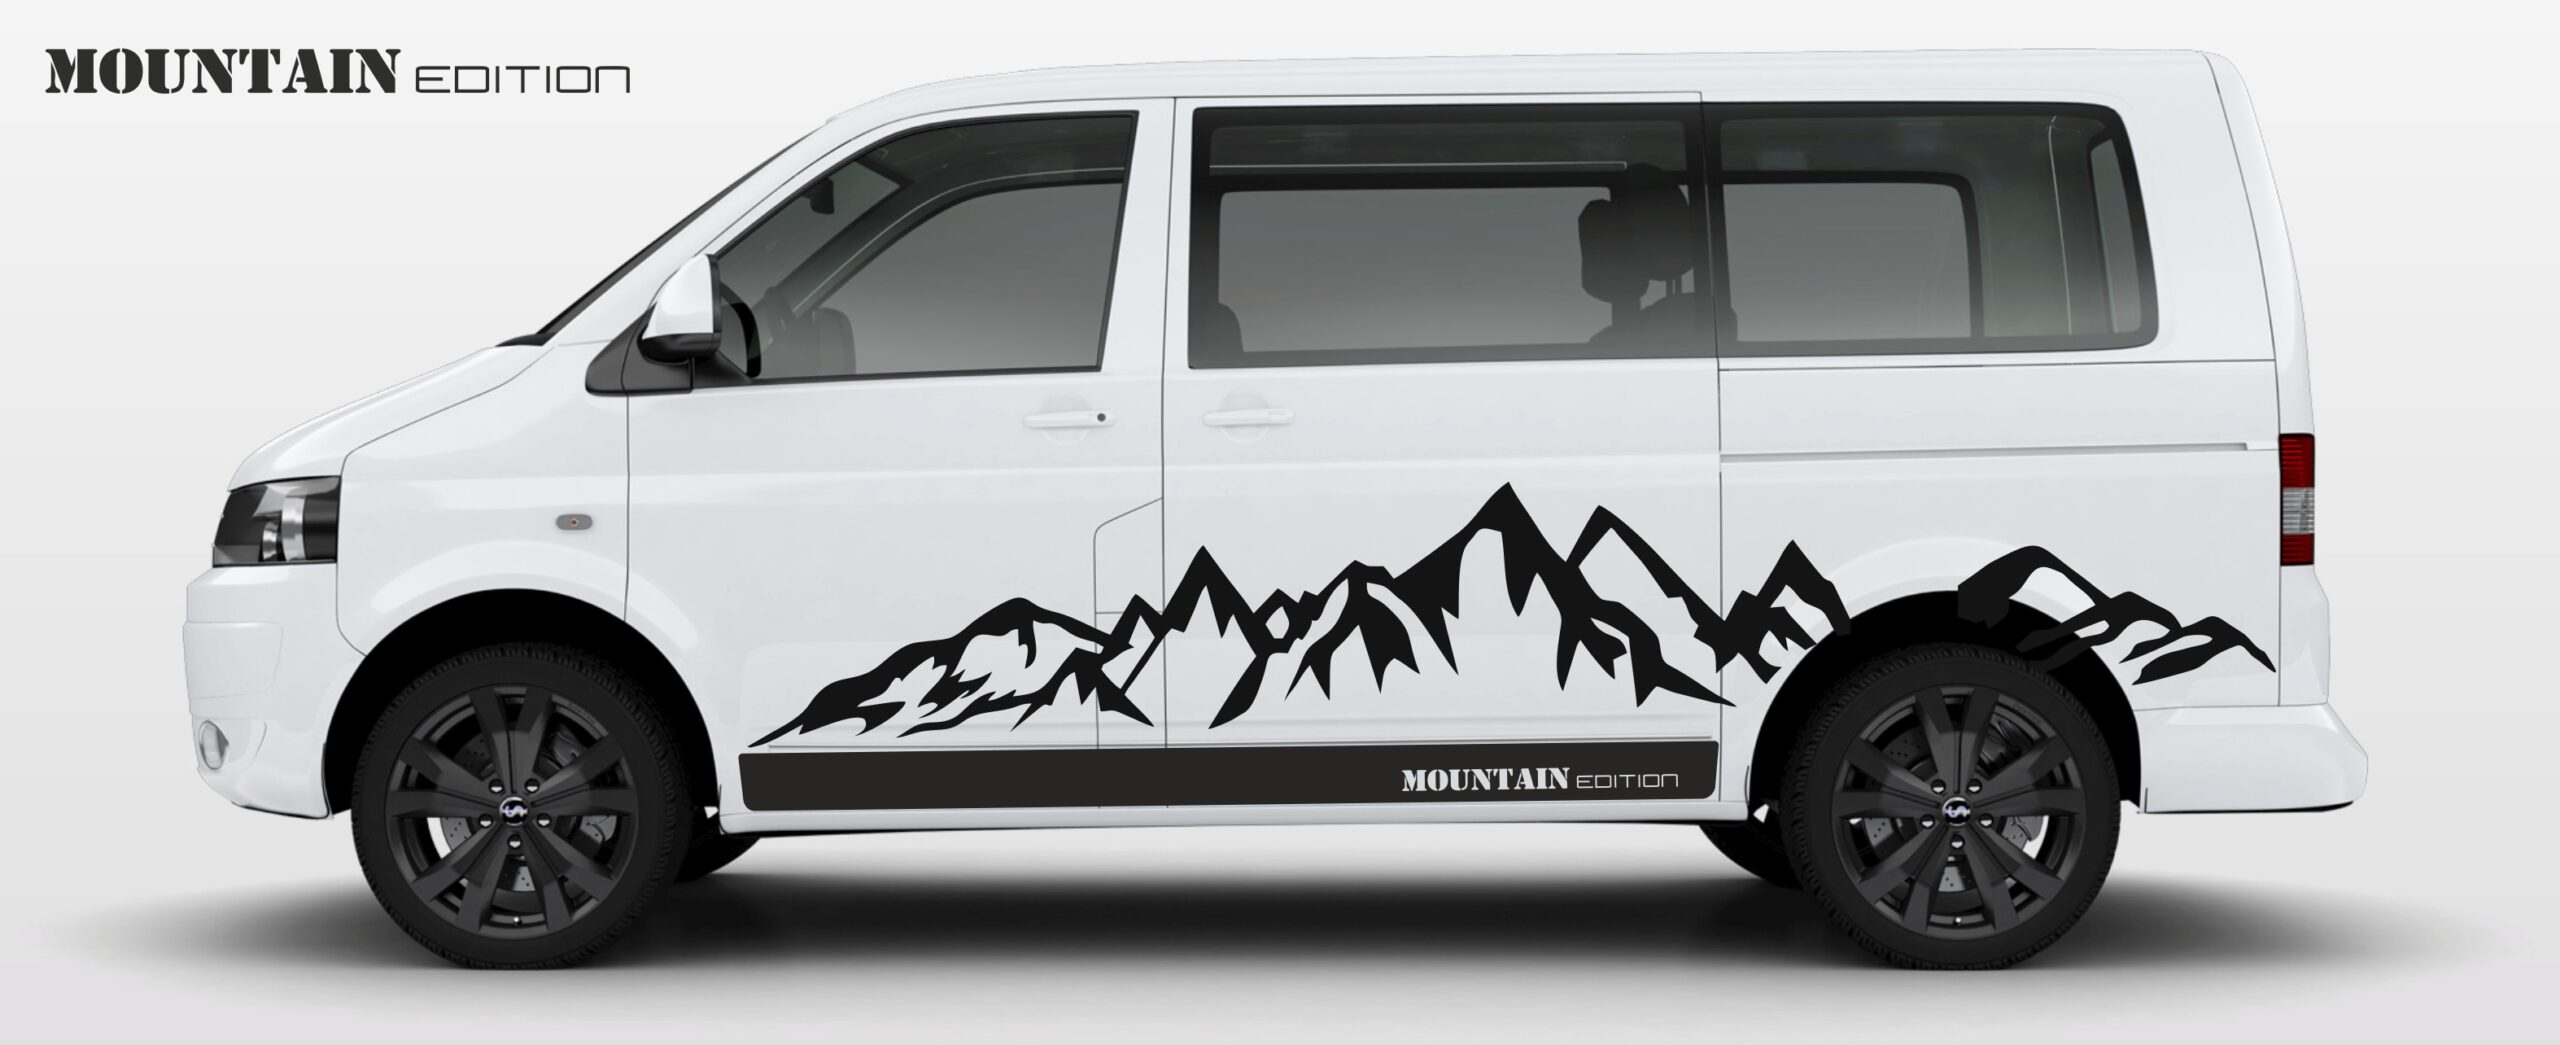 VW transporter Góry Mountain edition pasy naklejki decals stripes sticker aufkleber nalepky samolepky tuning